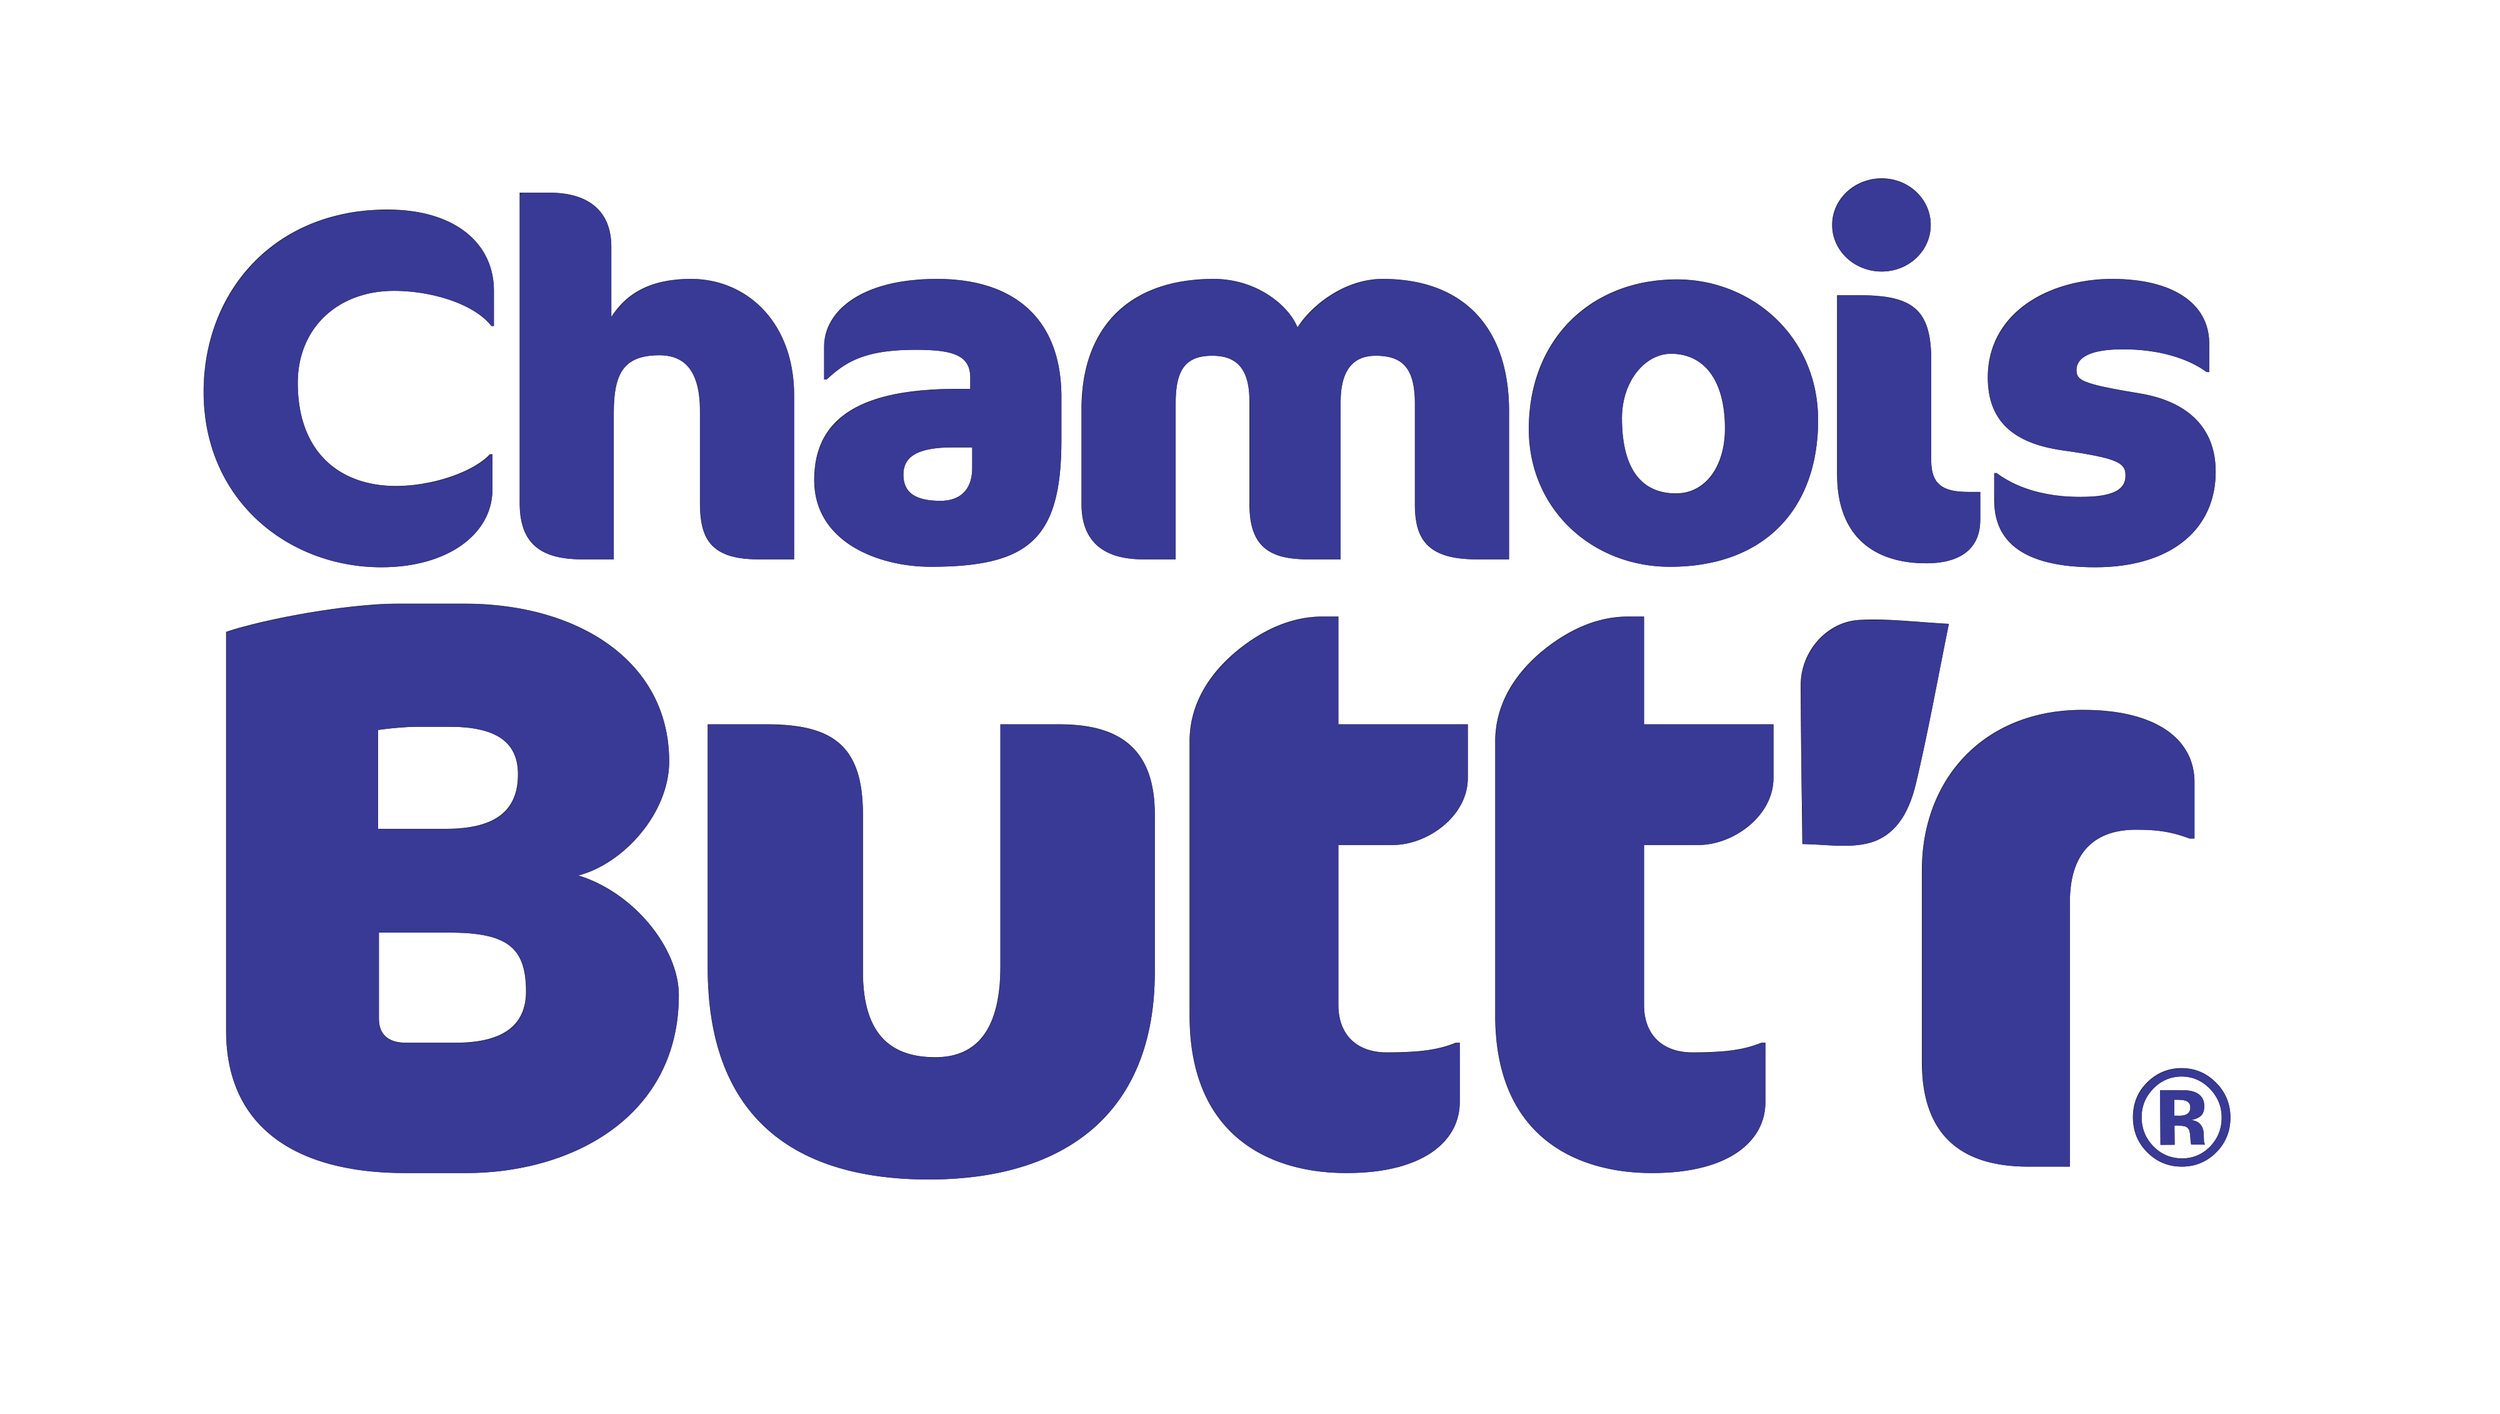 ChamoisButtr2016_Purple.jpg